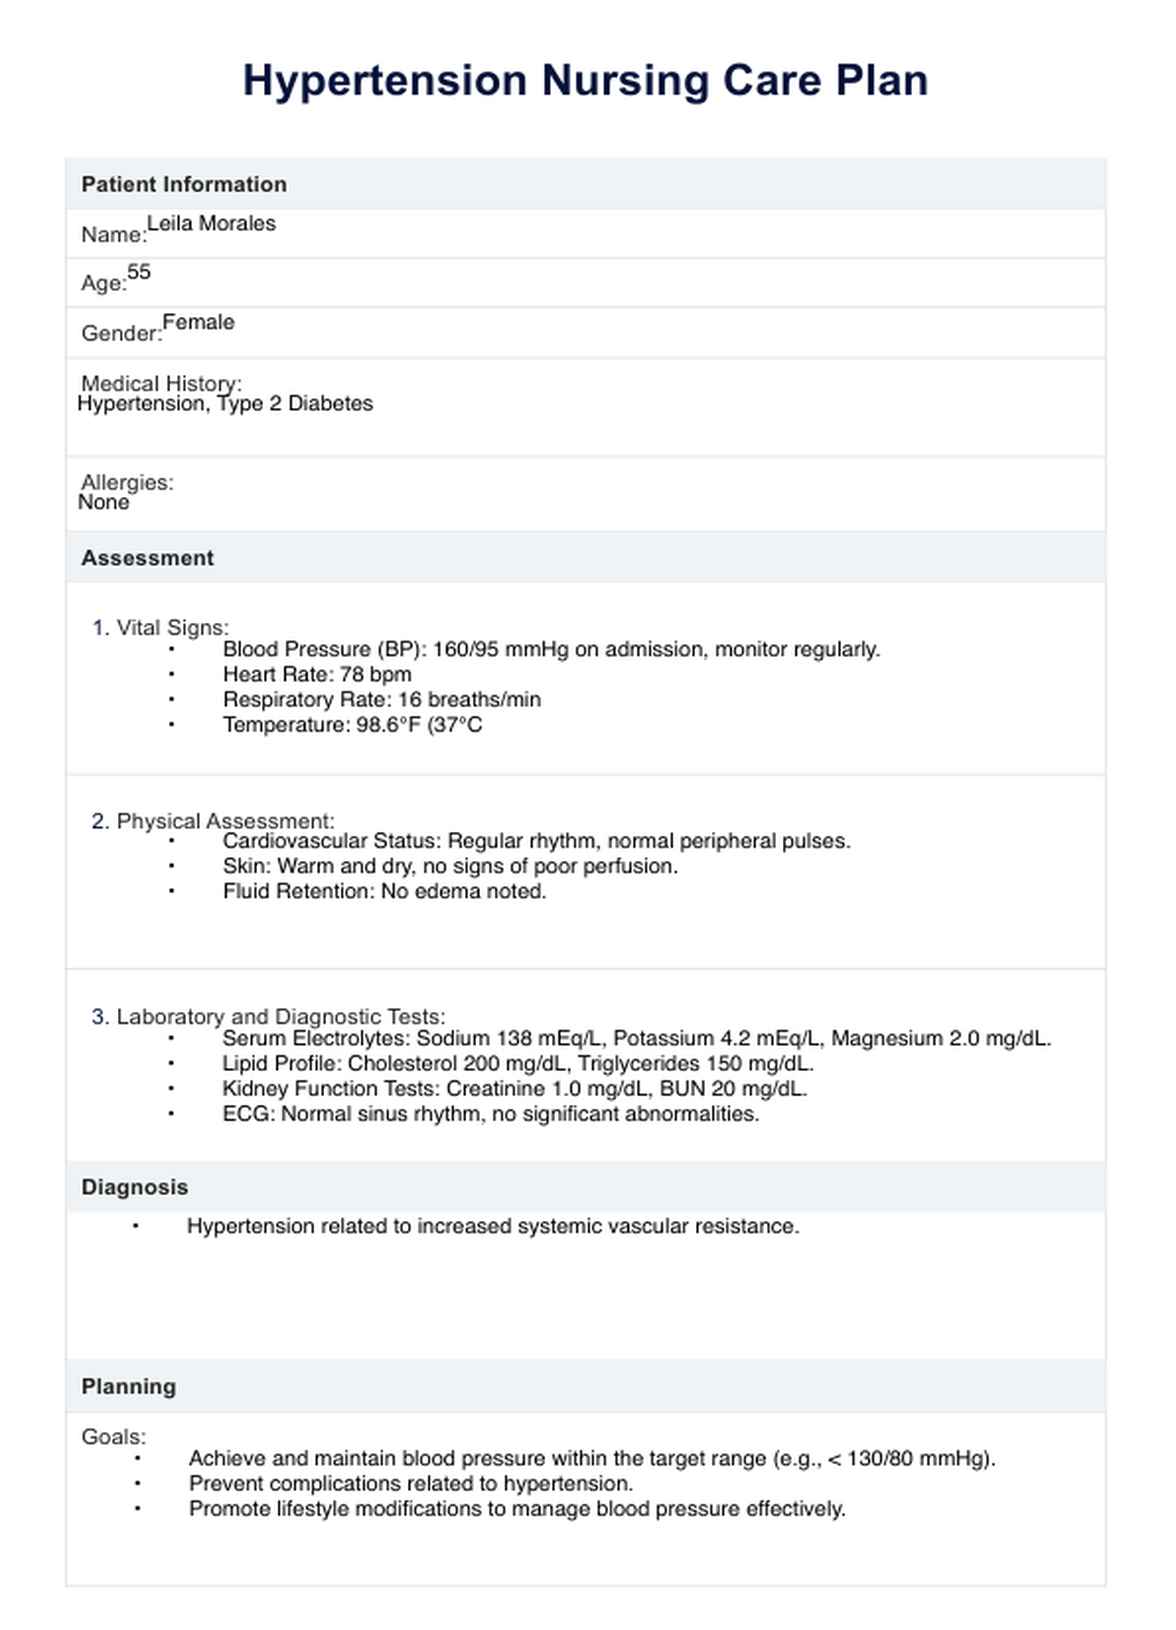 Hypertension Nursing Care Plan PDF Example